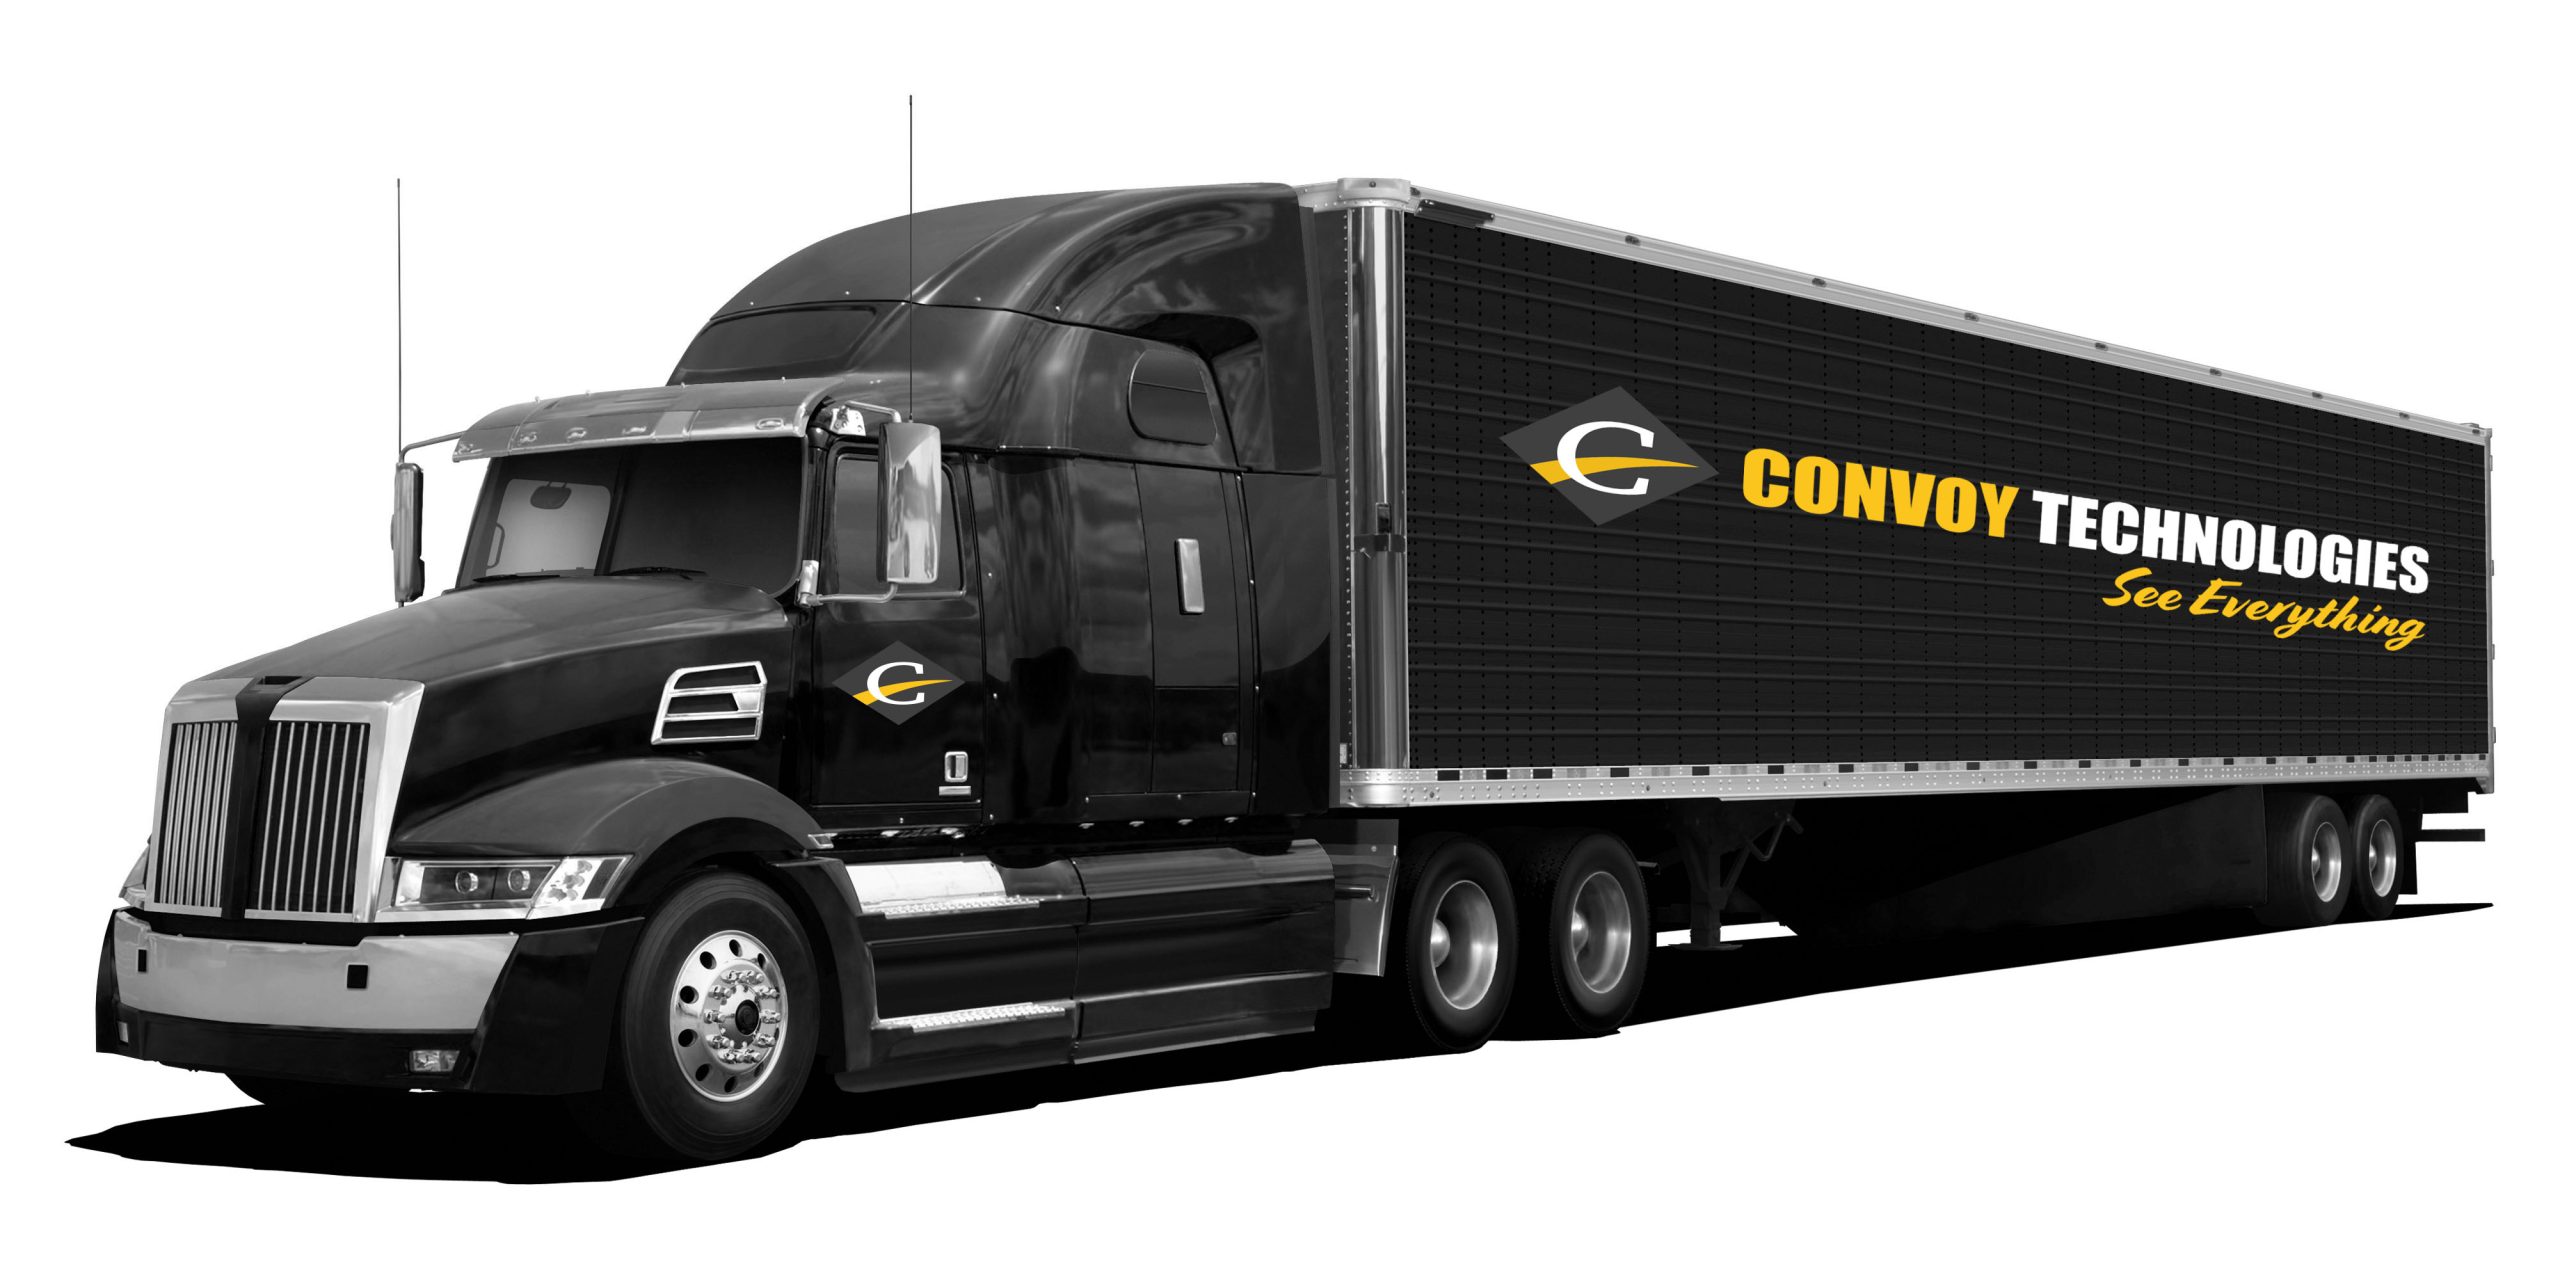 Convoy Technologies to Open New Factory in Windsor, Ontario